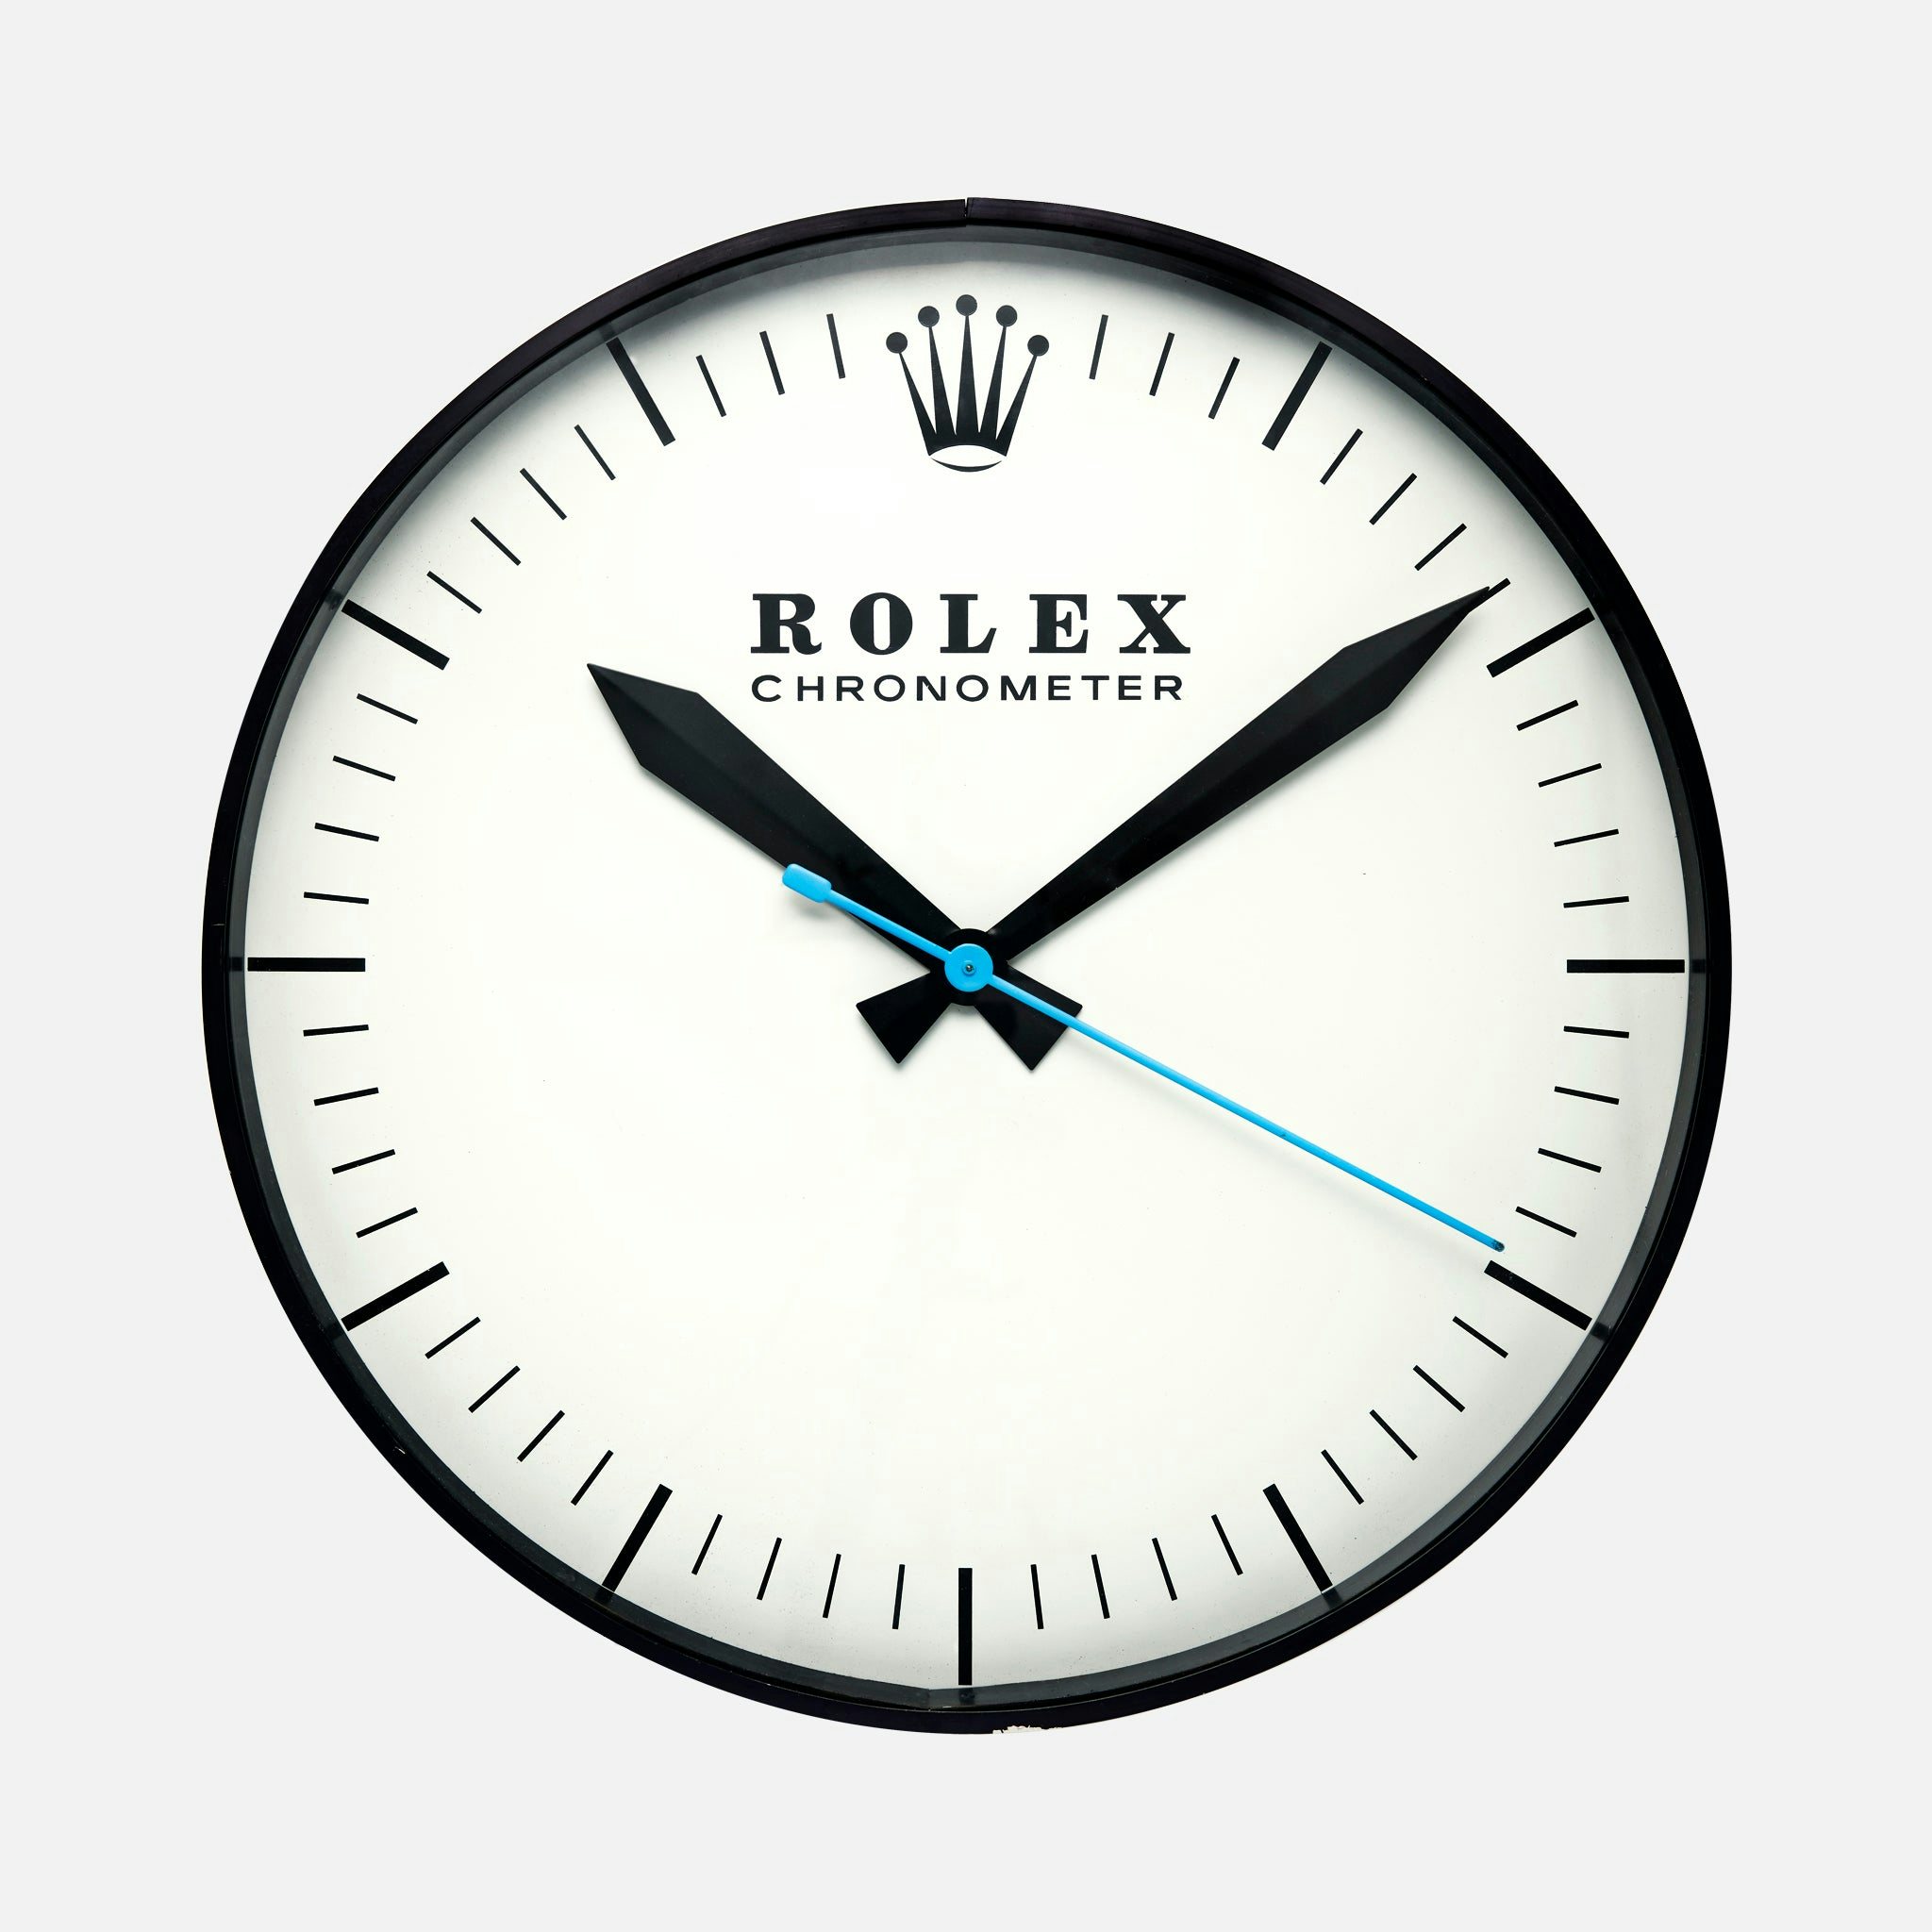 1960s Rolex 'Chronometer' Wall Clock - Shop